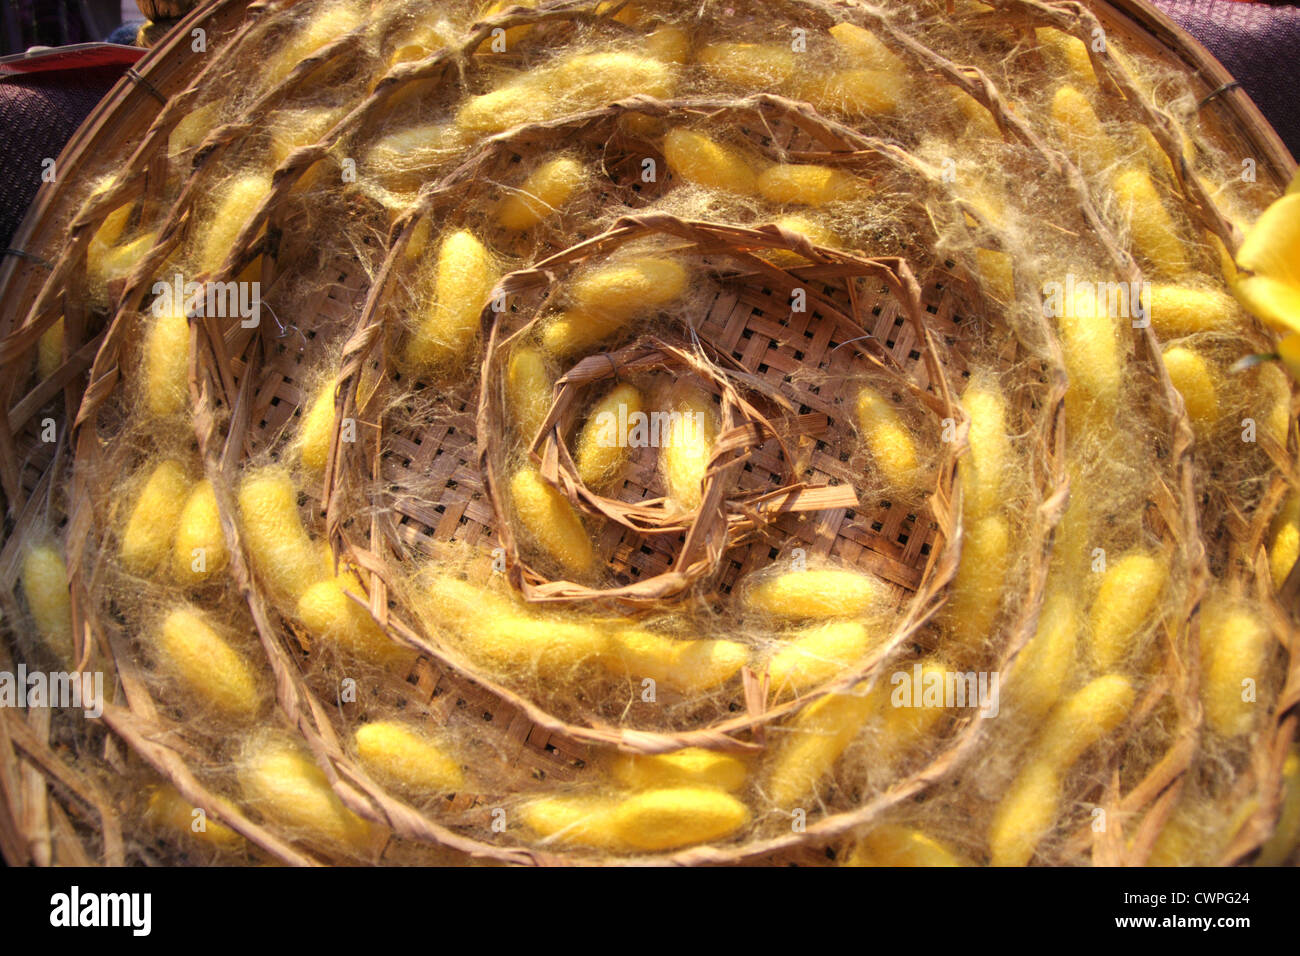 Silkworm larvae inside cocoons Stock Photo